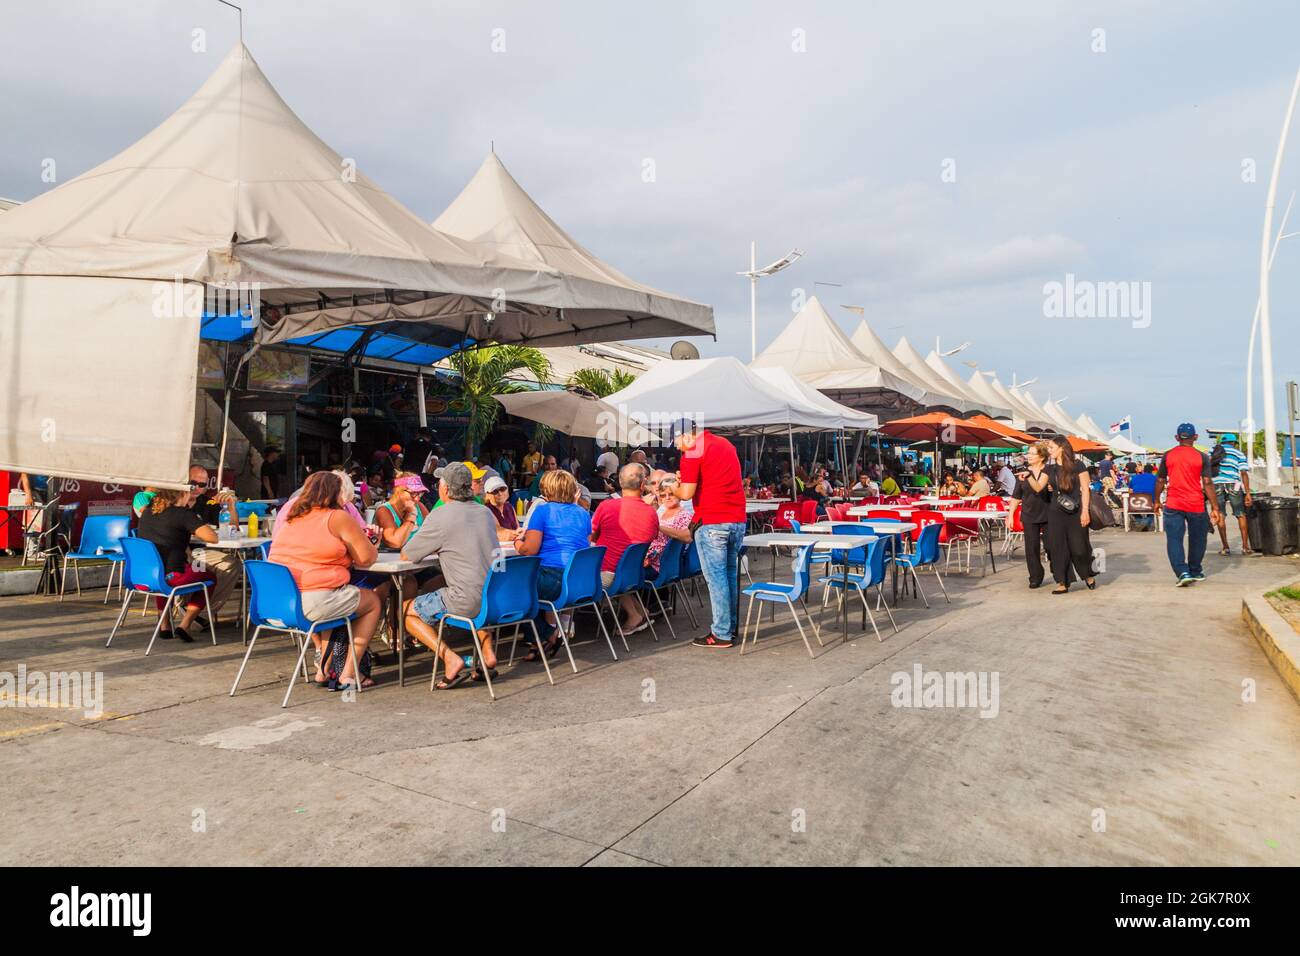 PANAMA CITY, PANAMA - 27. MAI 2016: Verschiedene Restaurants auf dem Mercado de Mariscos Seafood Market in Panama City Stockfoto